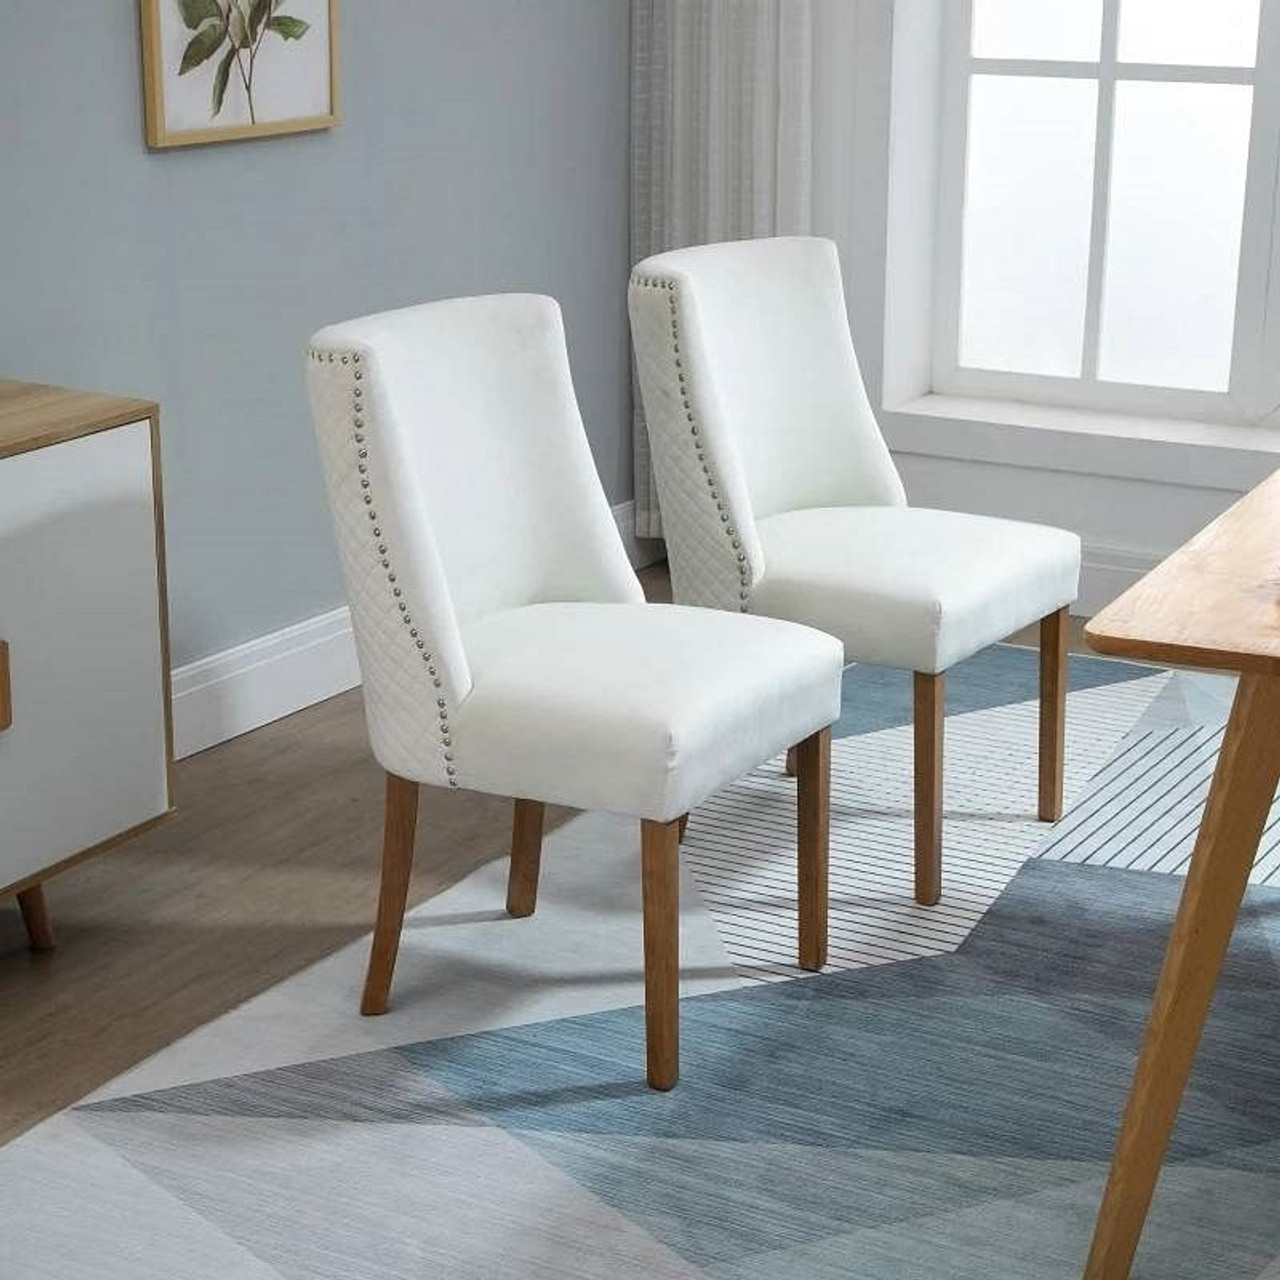 Set of 2 Modern Nailhead Diamond Stitch Upholstered Dining Chairs Beige White